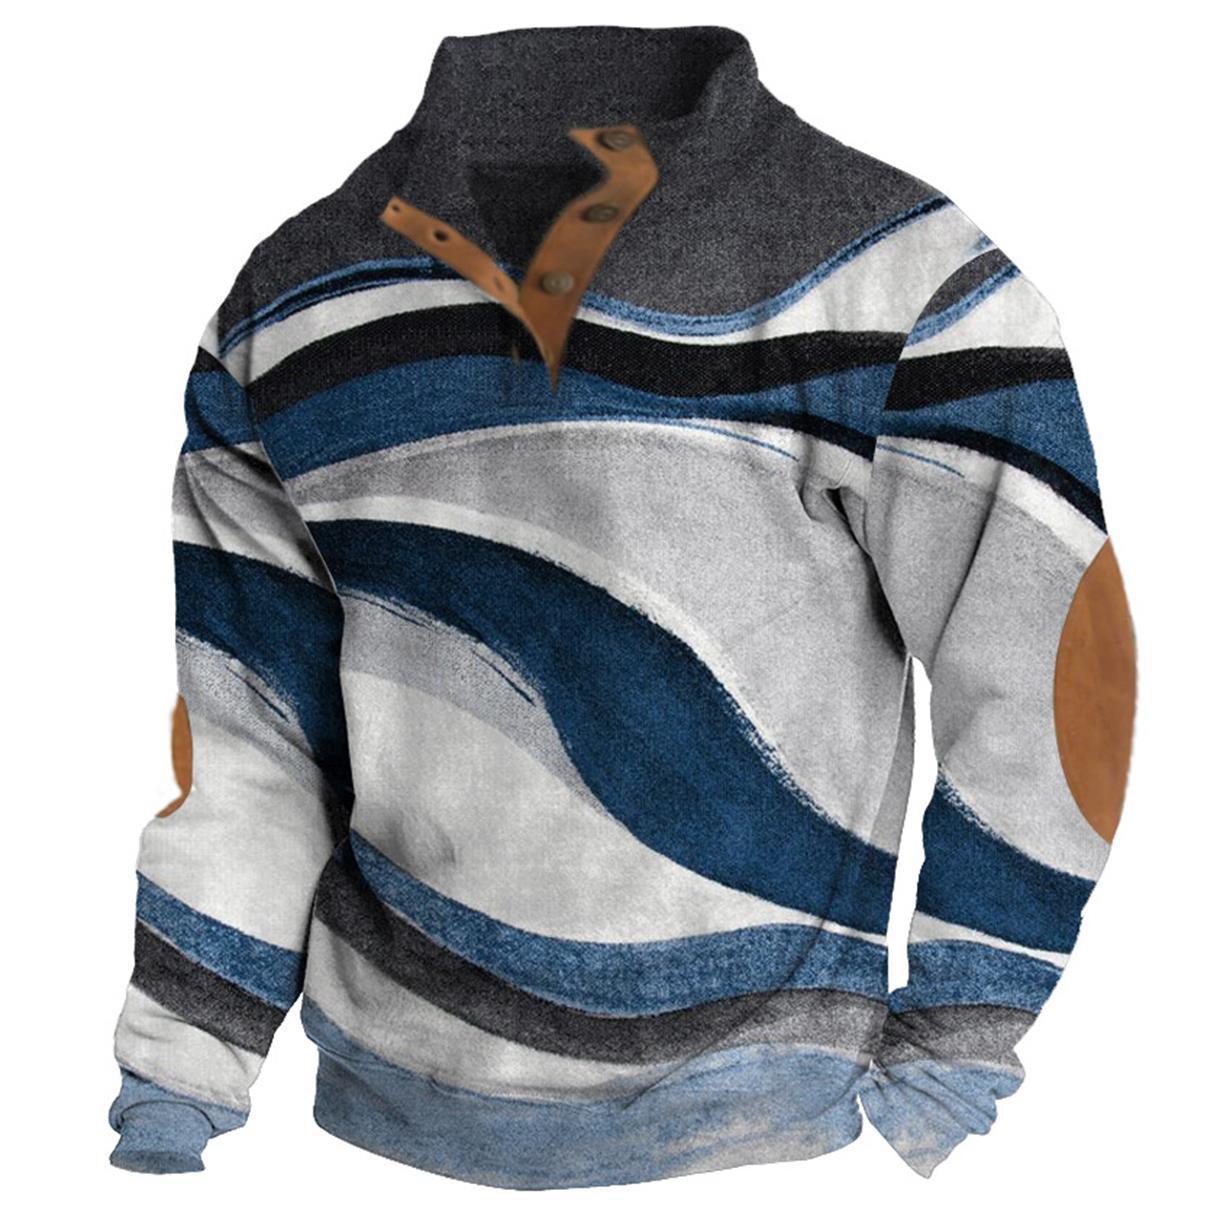 Autumn Outdoor 3D Digital Printing Stand Collar Men's Clothing Casual Sweatshirt